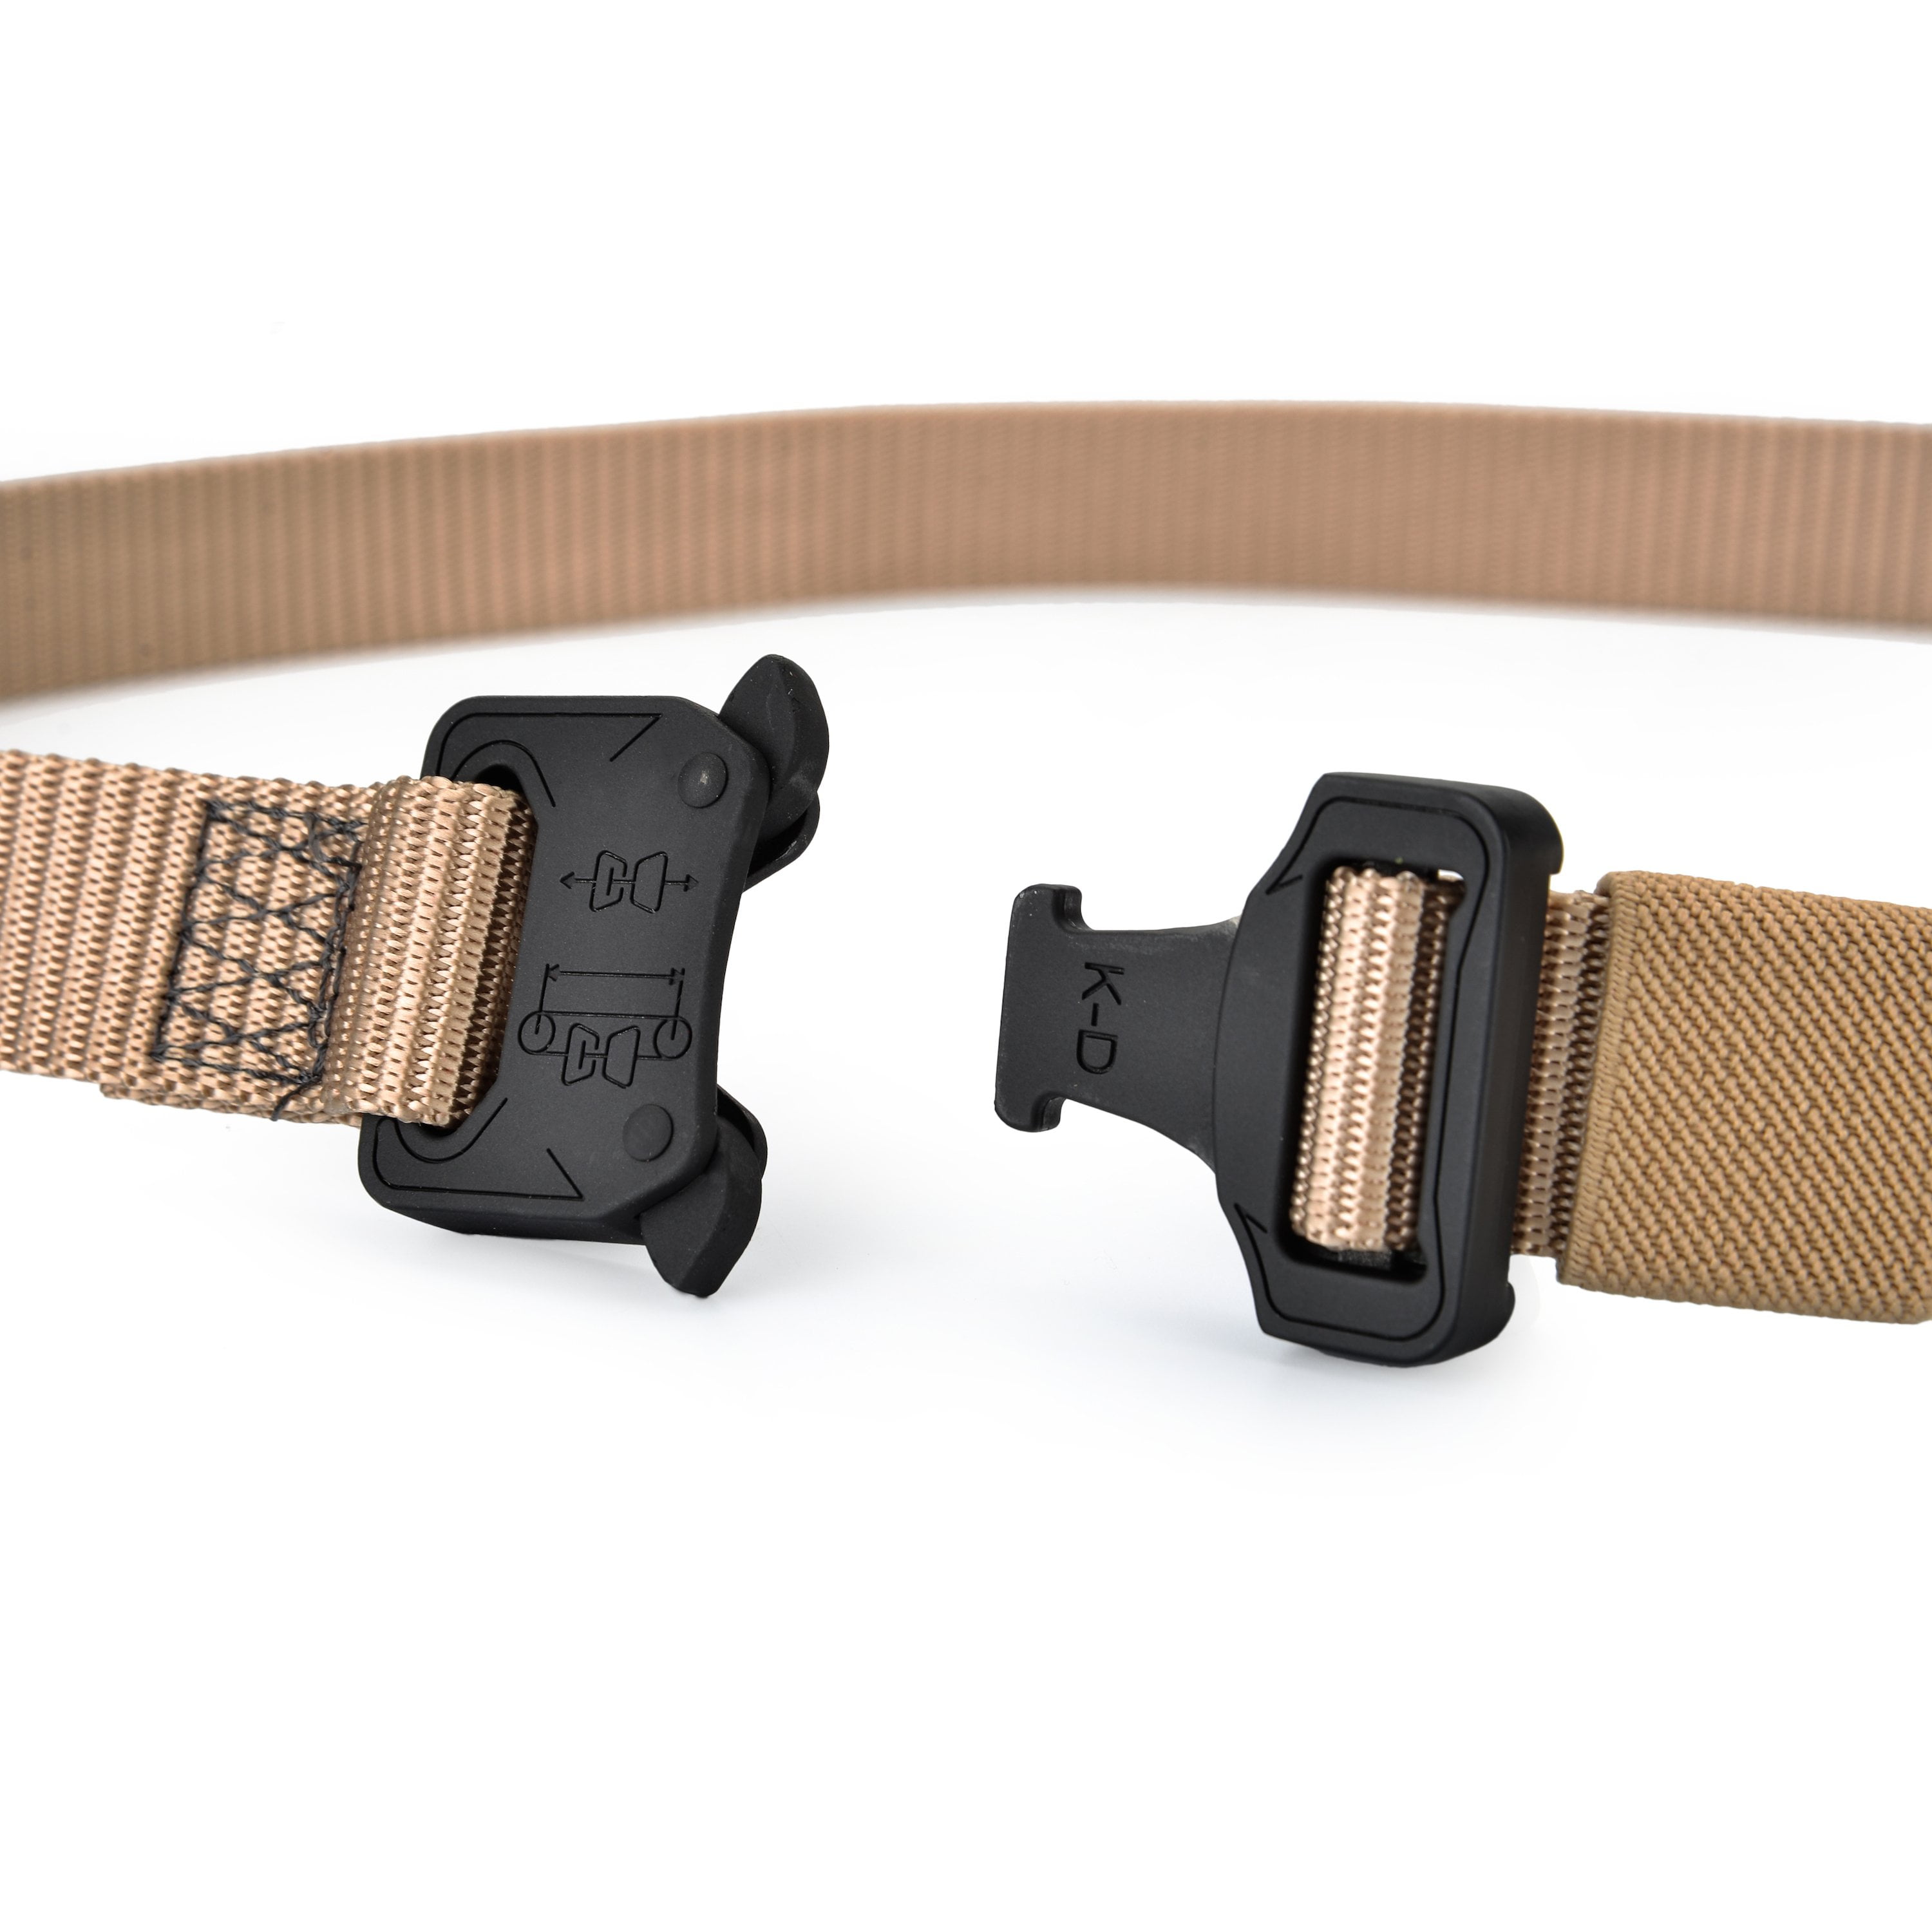 NiceShop16 Quick Release Nylon Belt Heavy Duty Military Webbing Belts 1 inch 